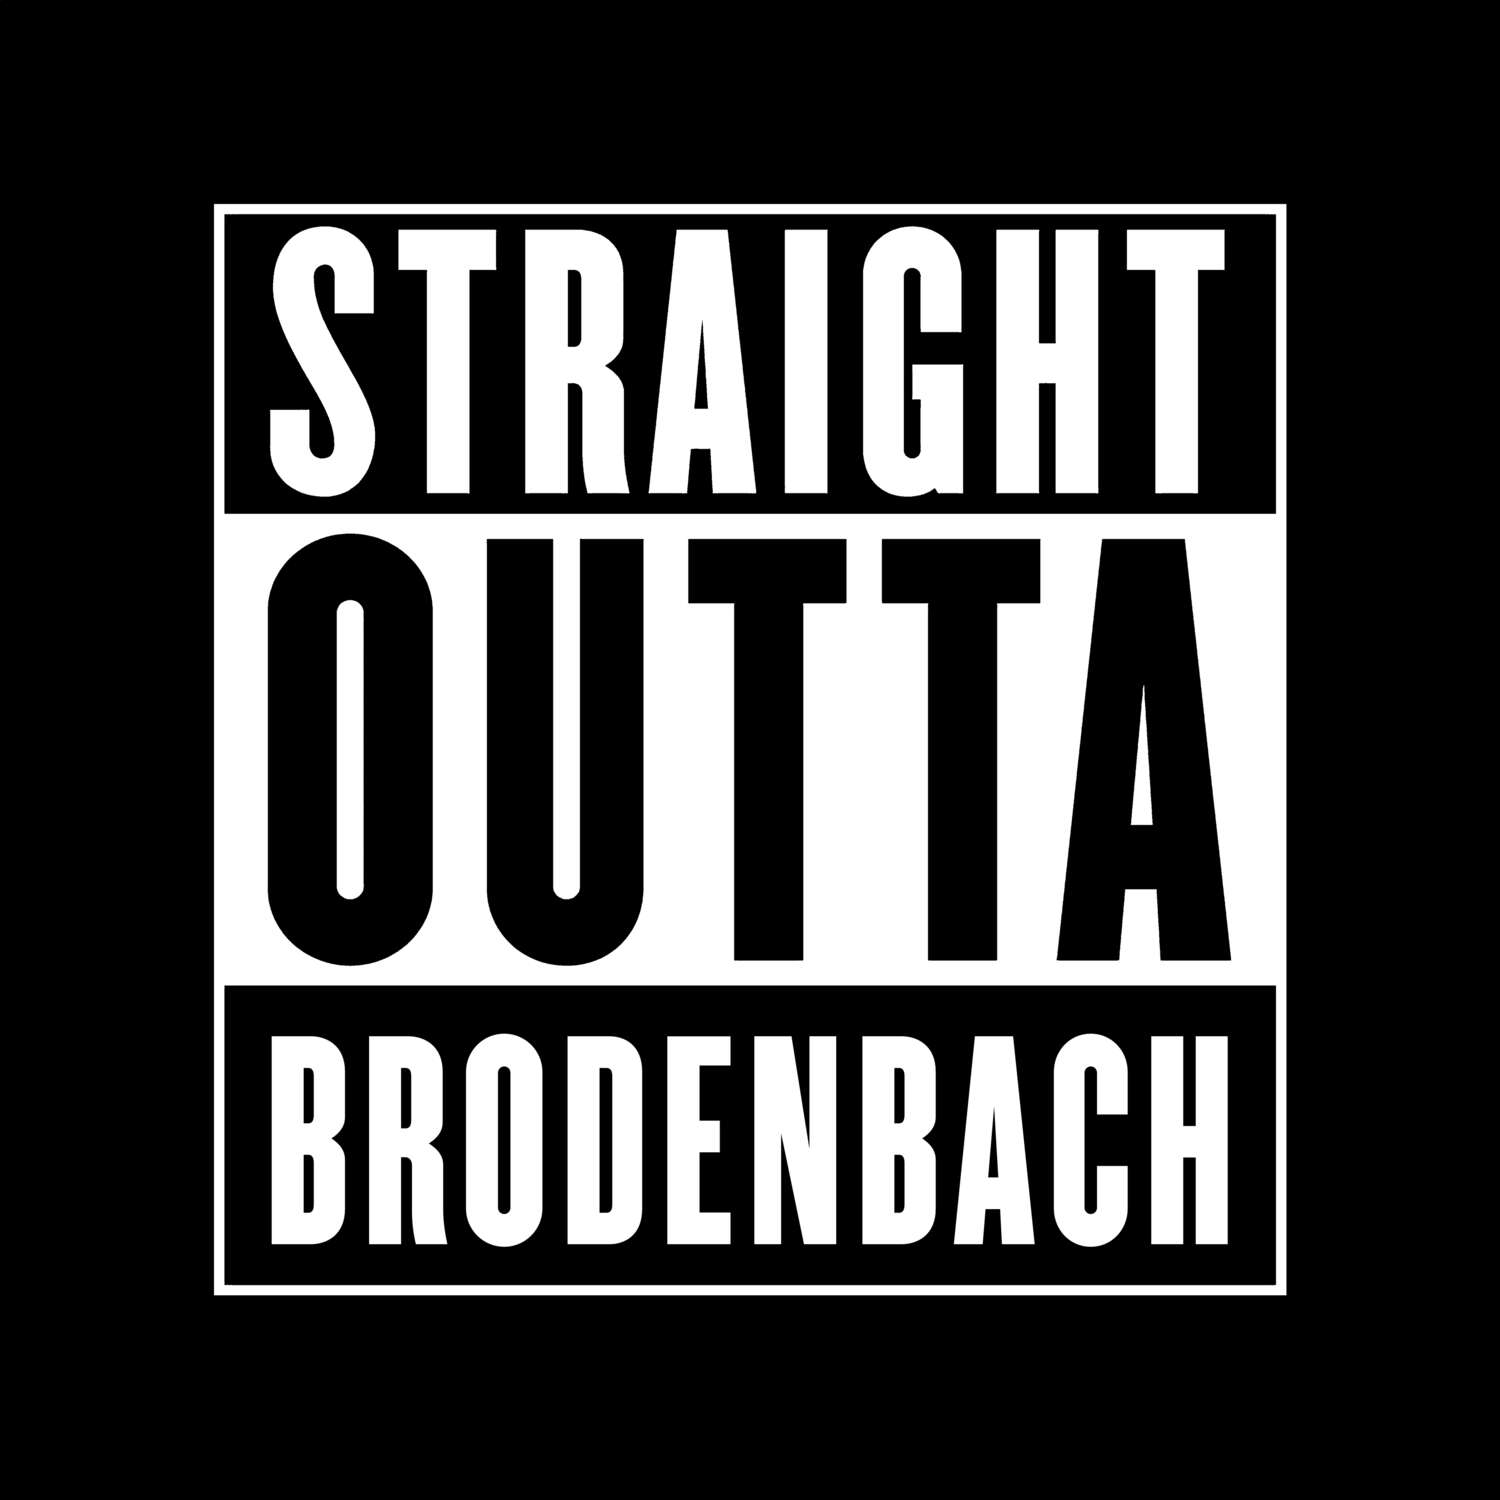 Brodenbach T-Shirt »Straight Outta«